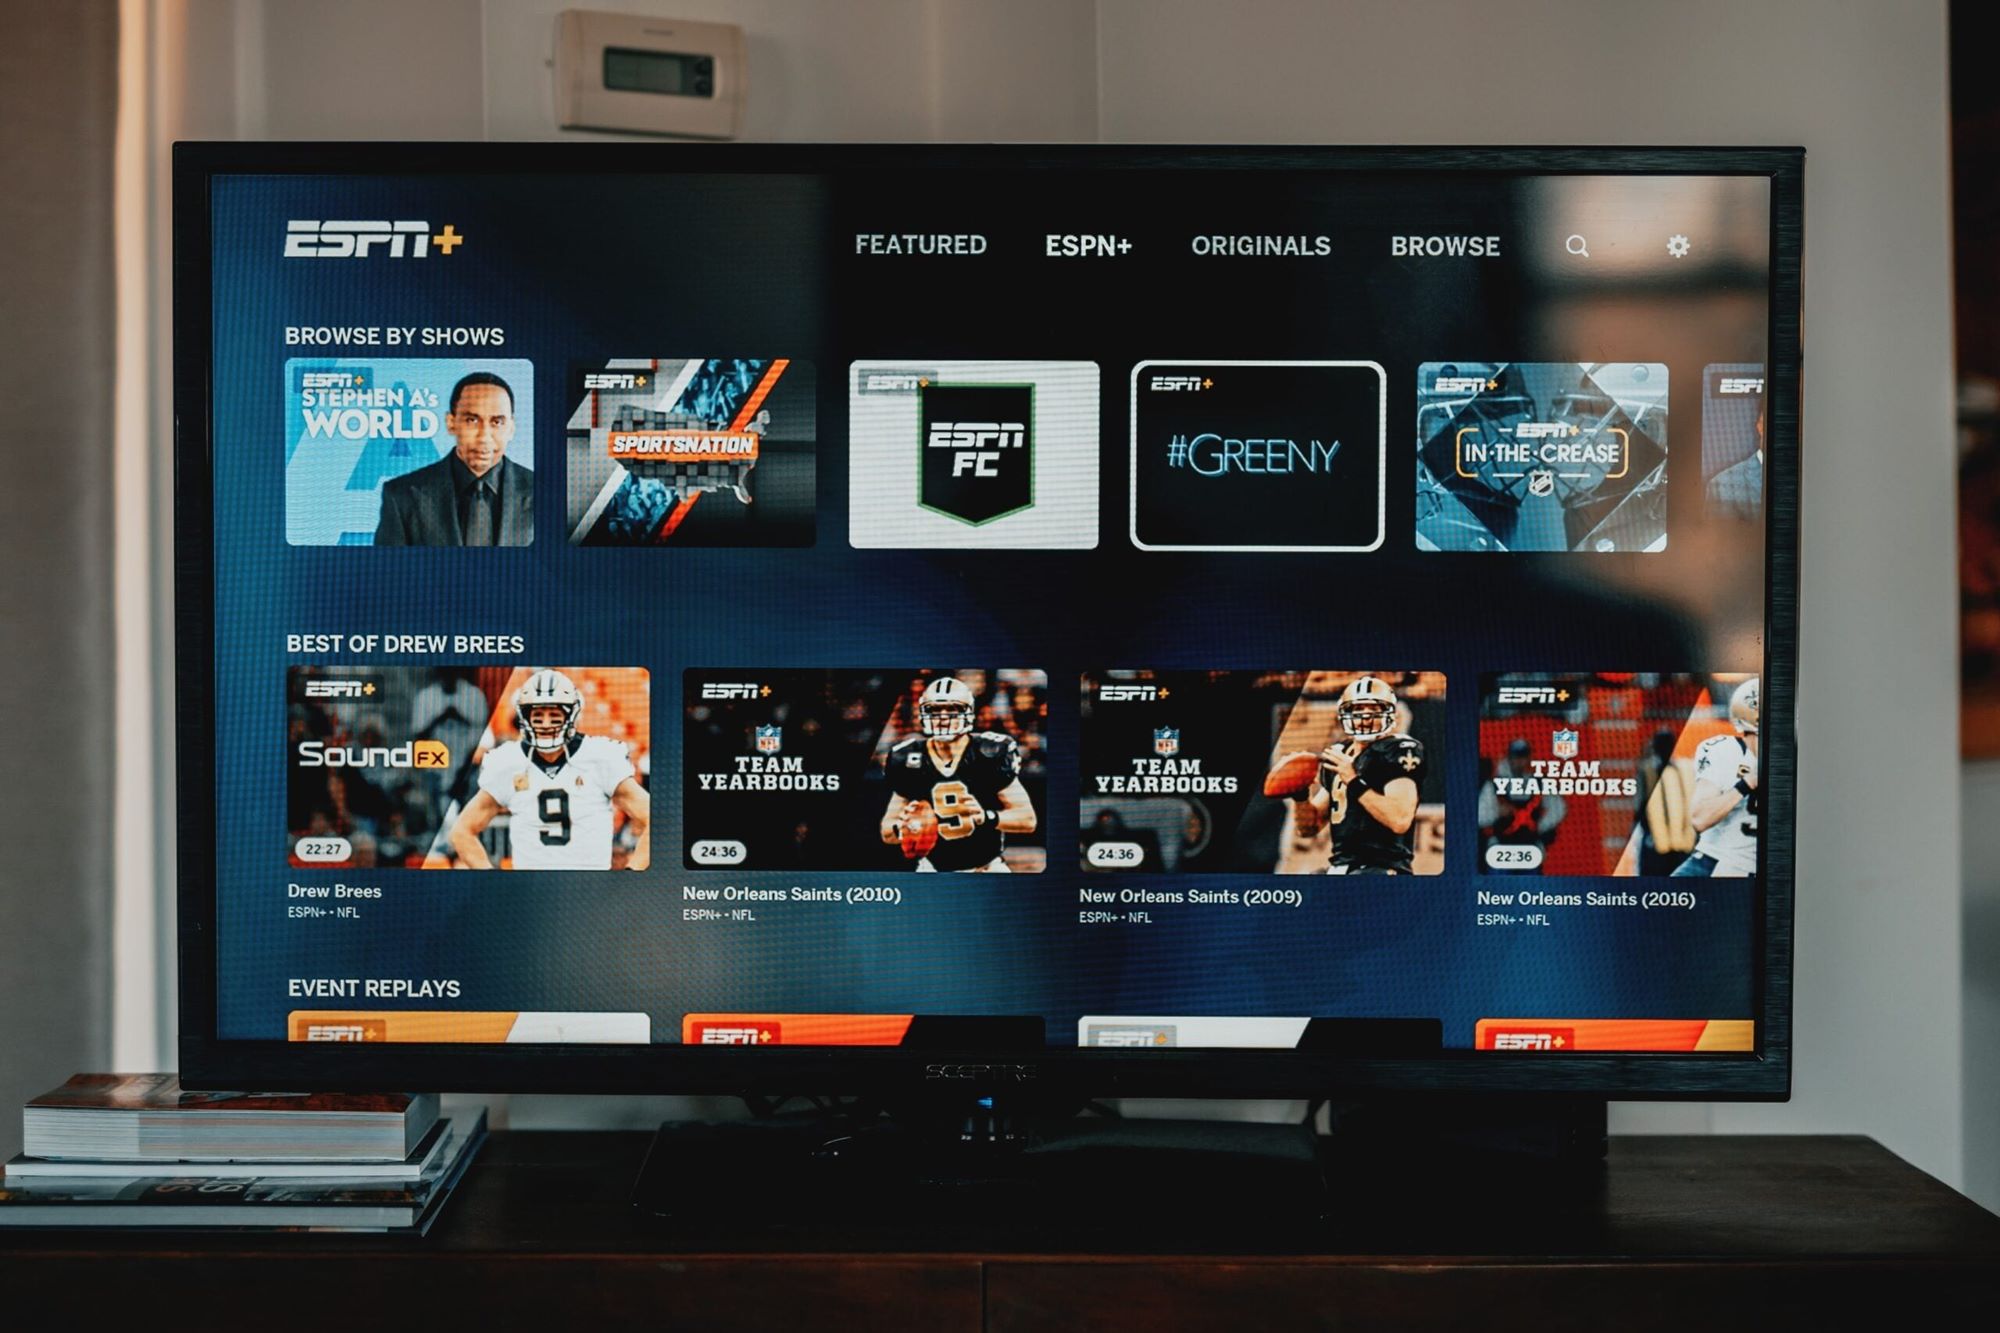 How To Watch ESPN On Amazon Prime